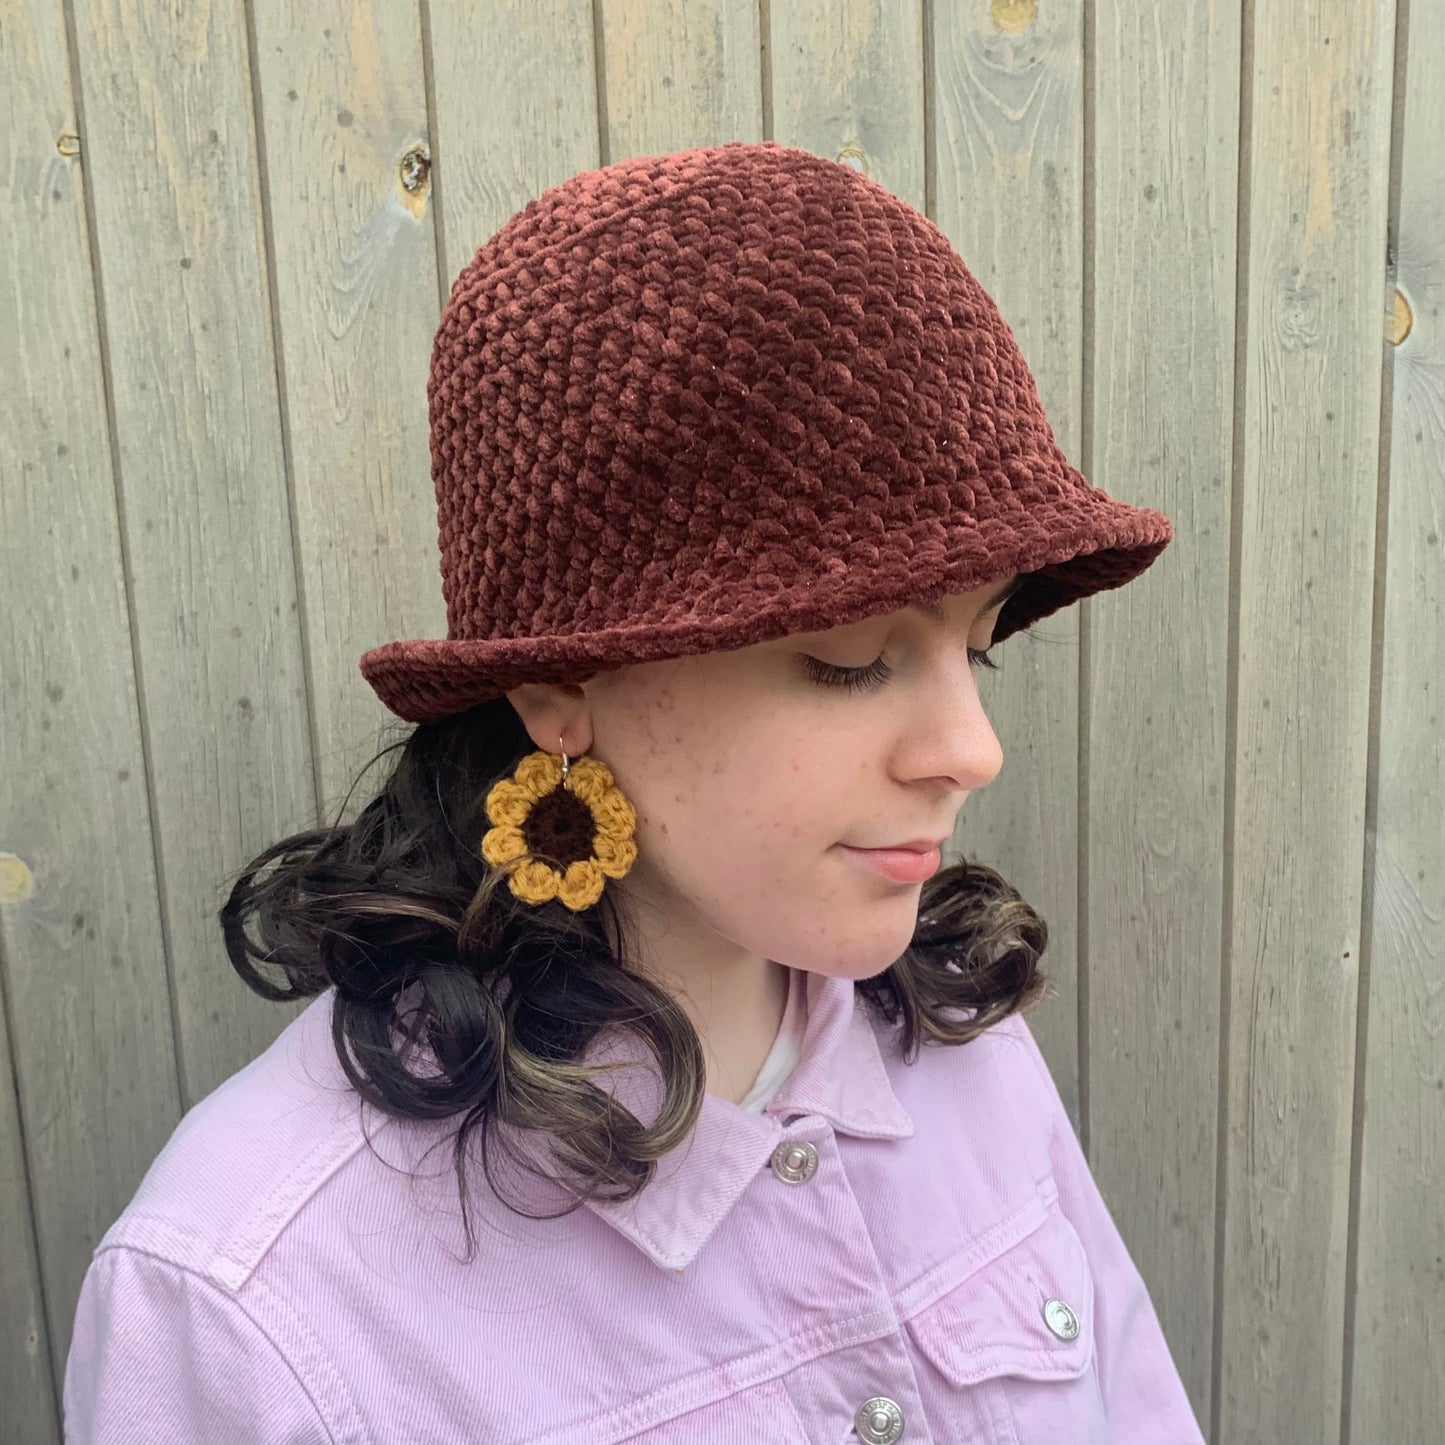 Handmade crushed velvet crochet bucket hat in brown